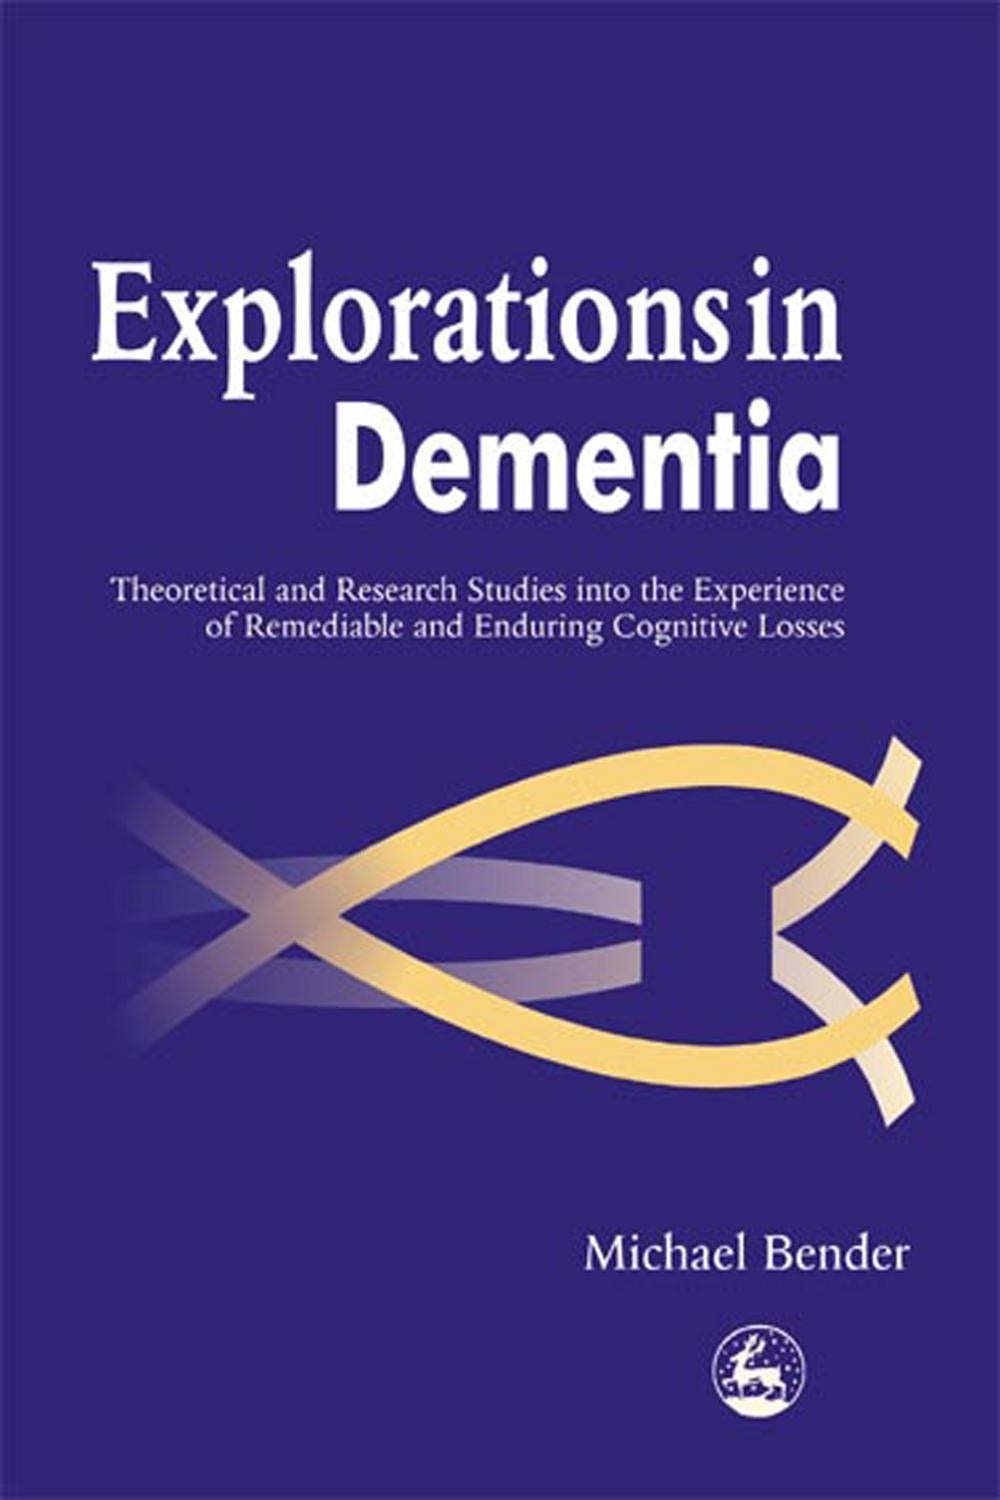 Explorations in Dementia by Michael Bender